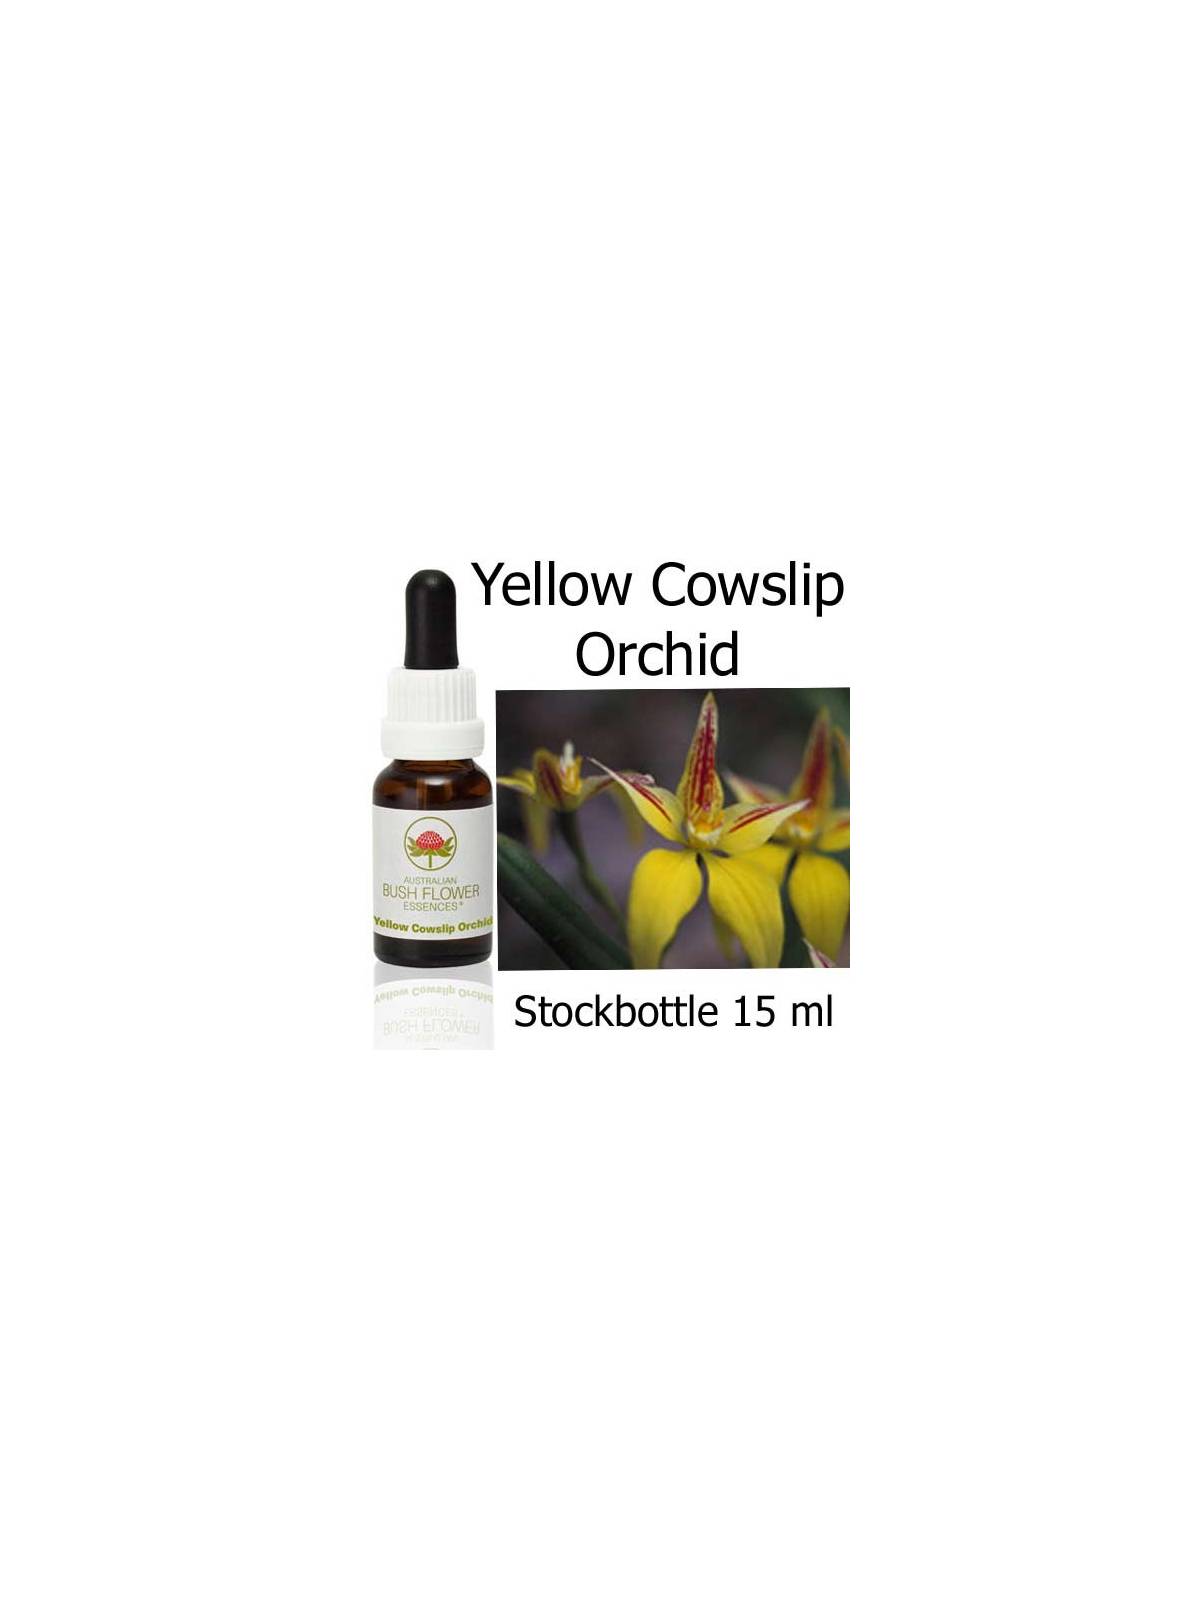 Australian Bush Flower Essences Yellow Cowslip Orchid stockbottles